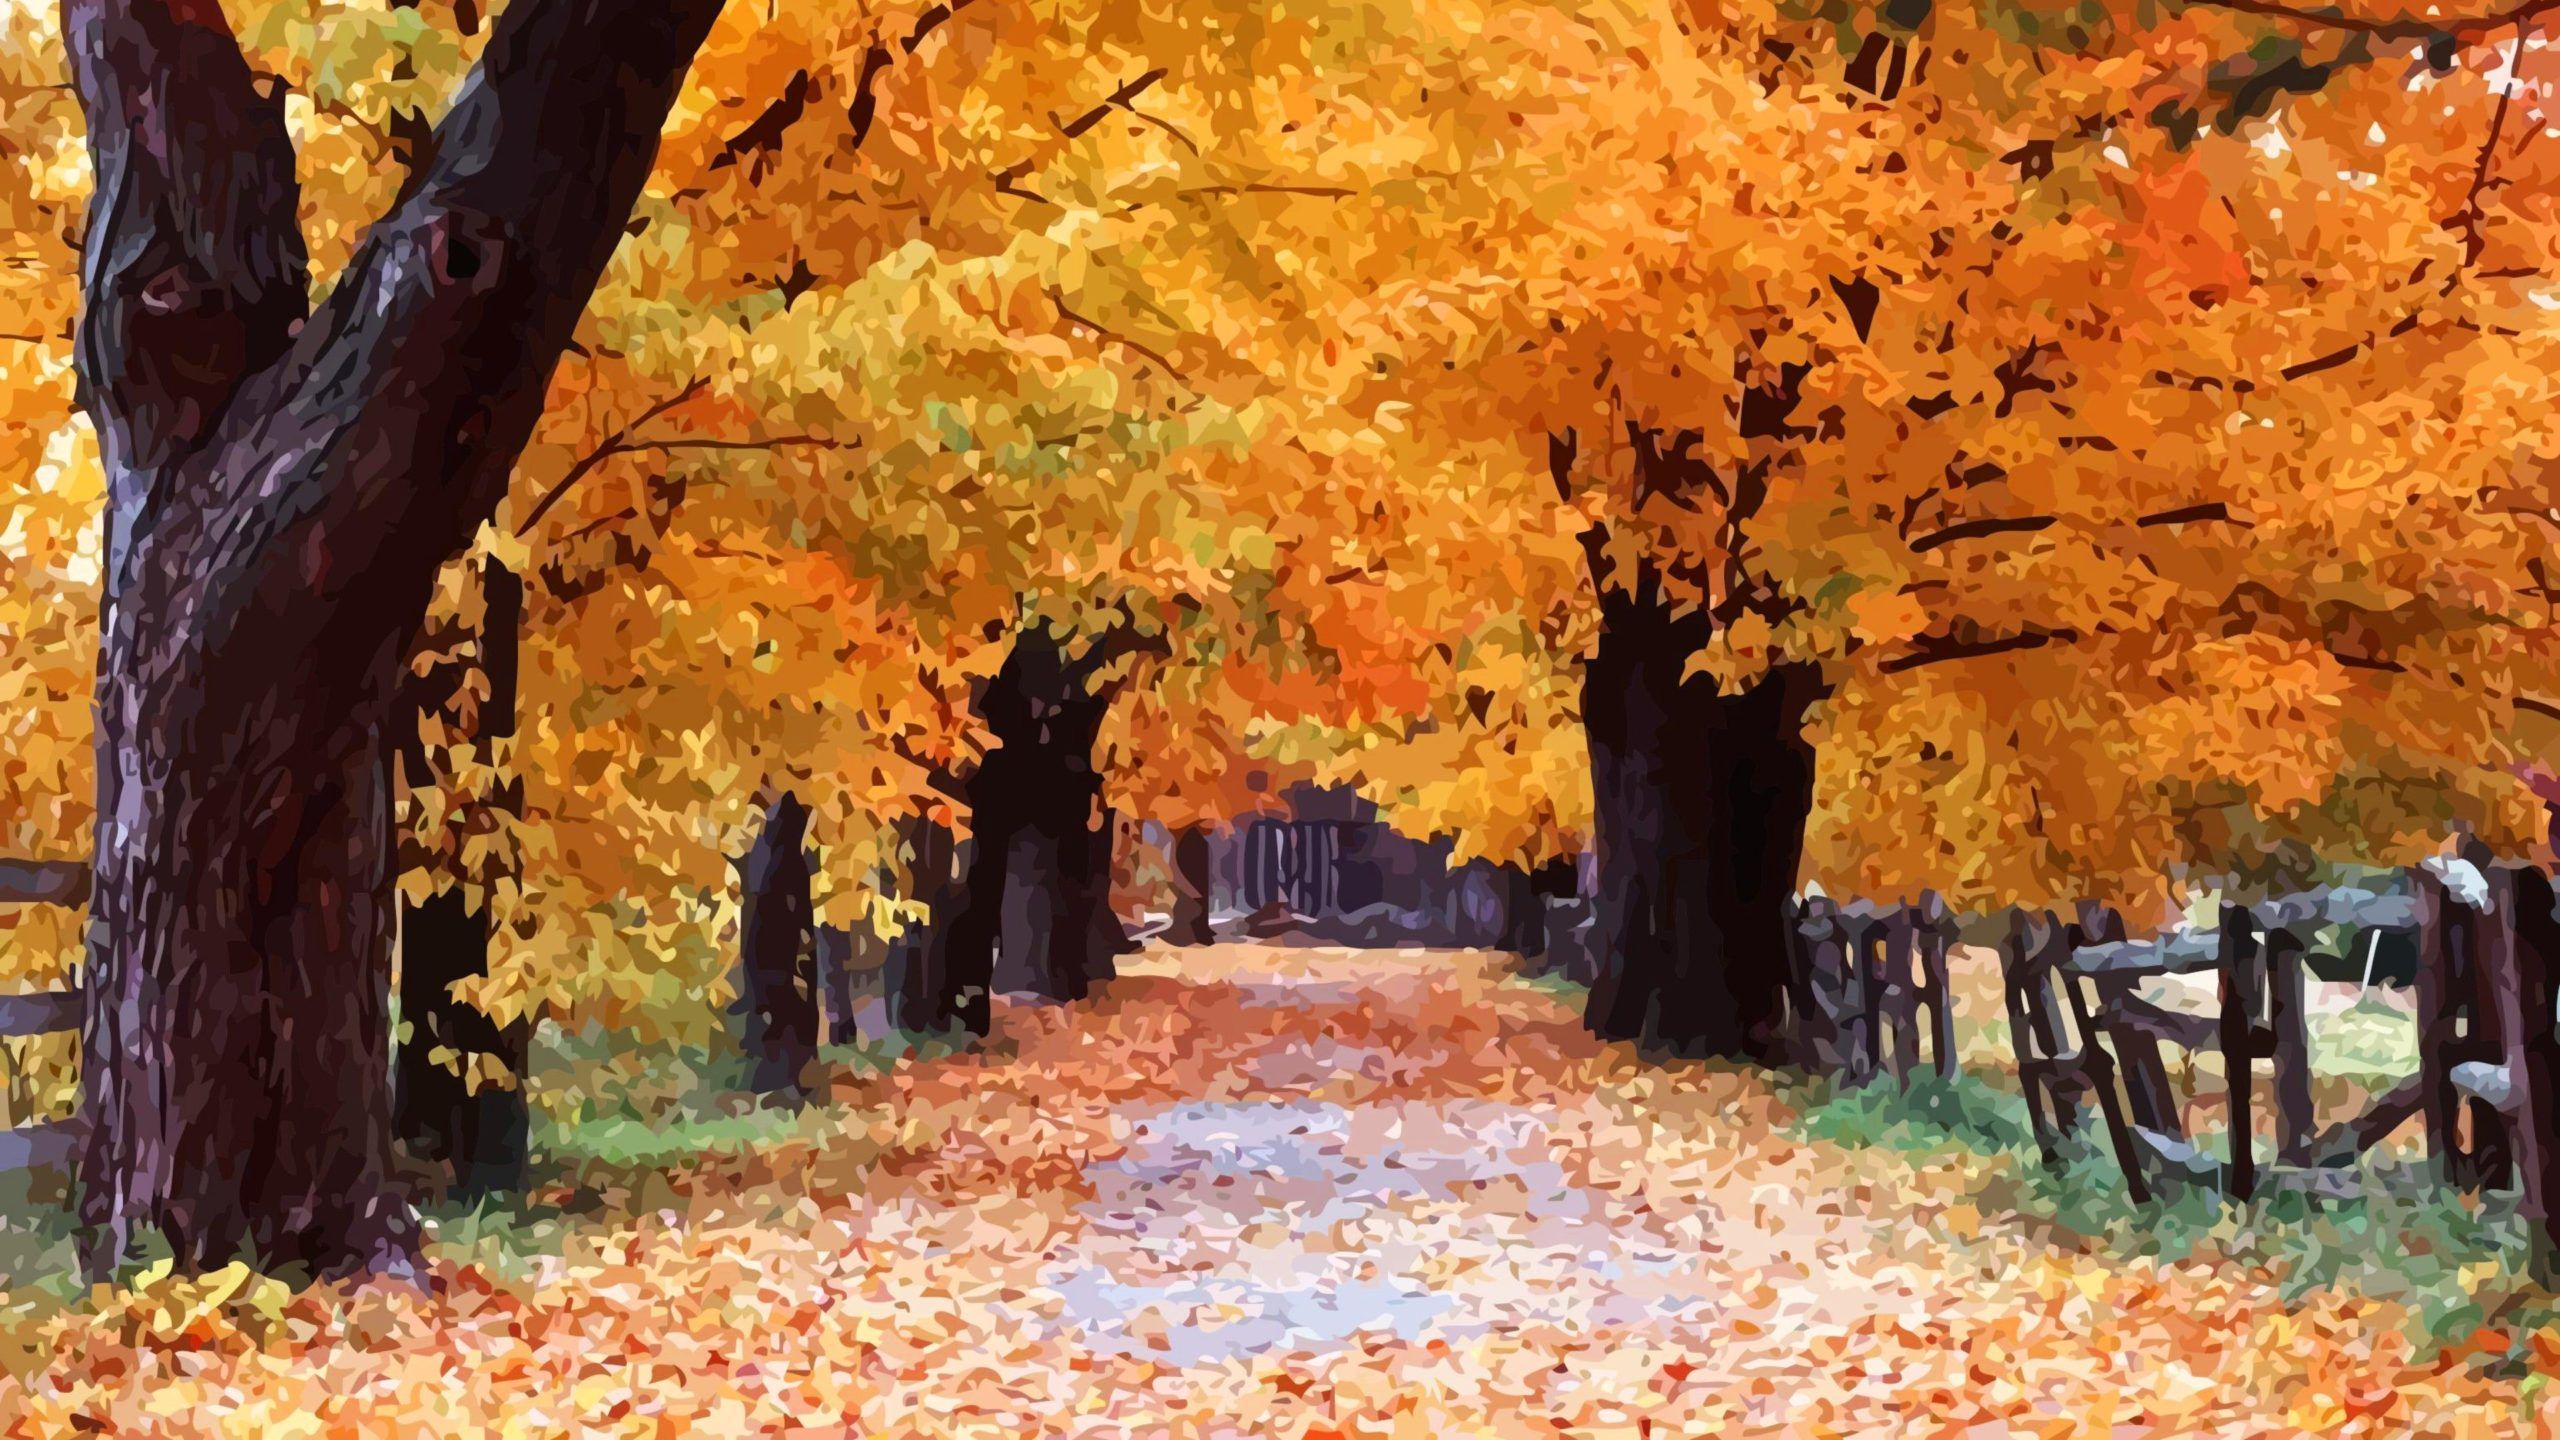 Autumn windows XP wallpaper. Desktop wallpaper fall, Good morning image hd, Good morning image